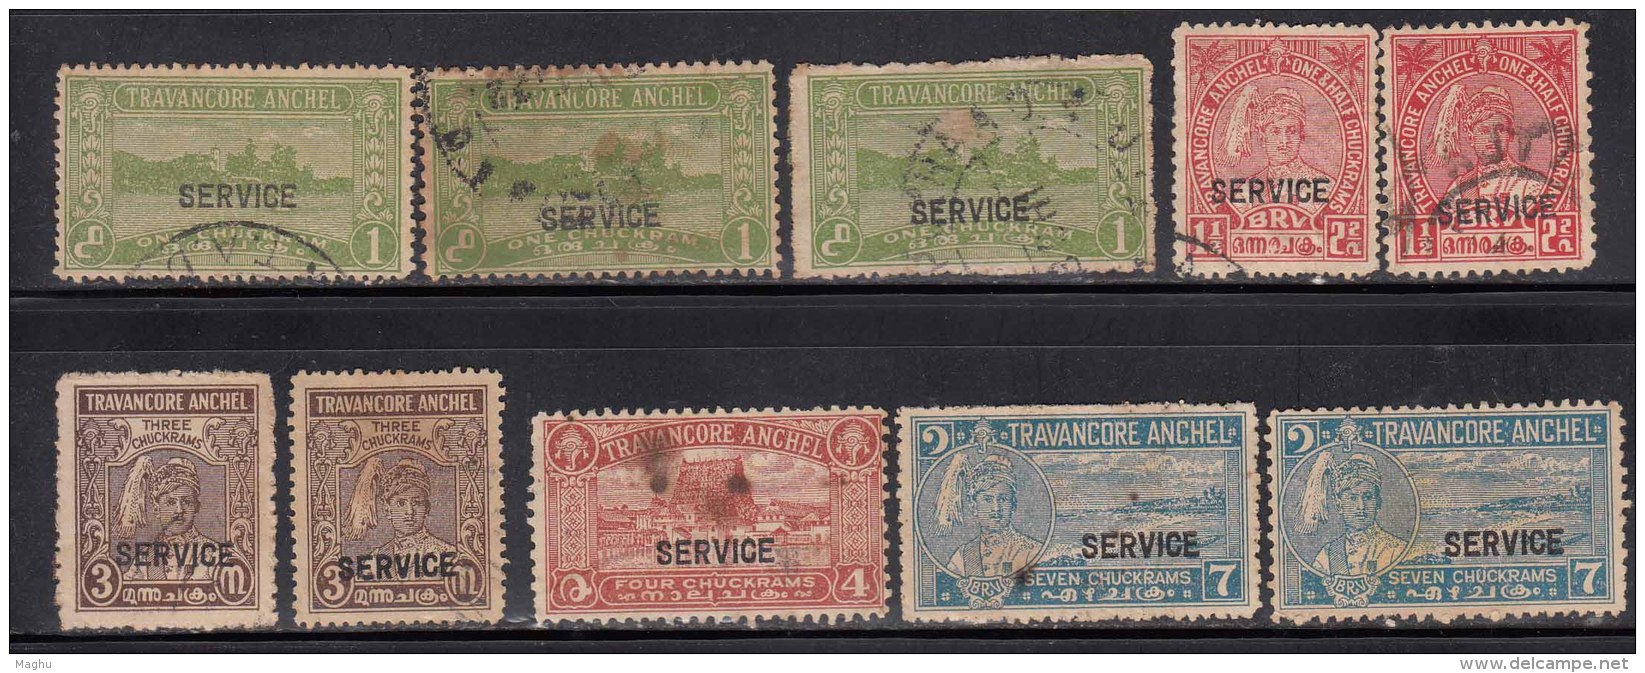 Perf. / Shade Varities, 1939 -141 Service, Maharaja's 27th Birthday Series, Travancore Used,  As Scan - Travancore